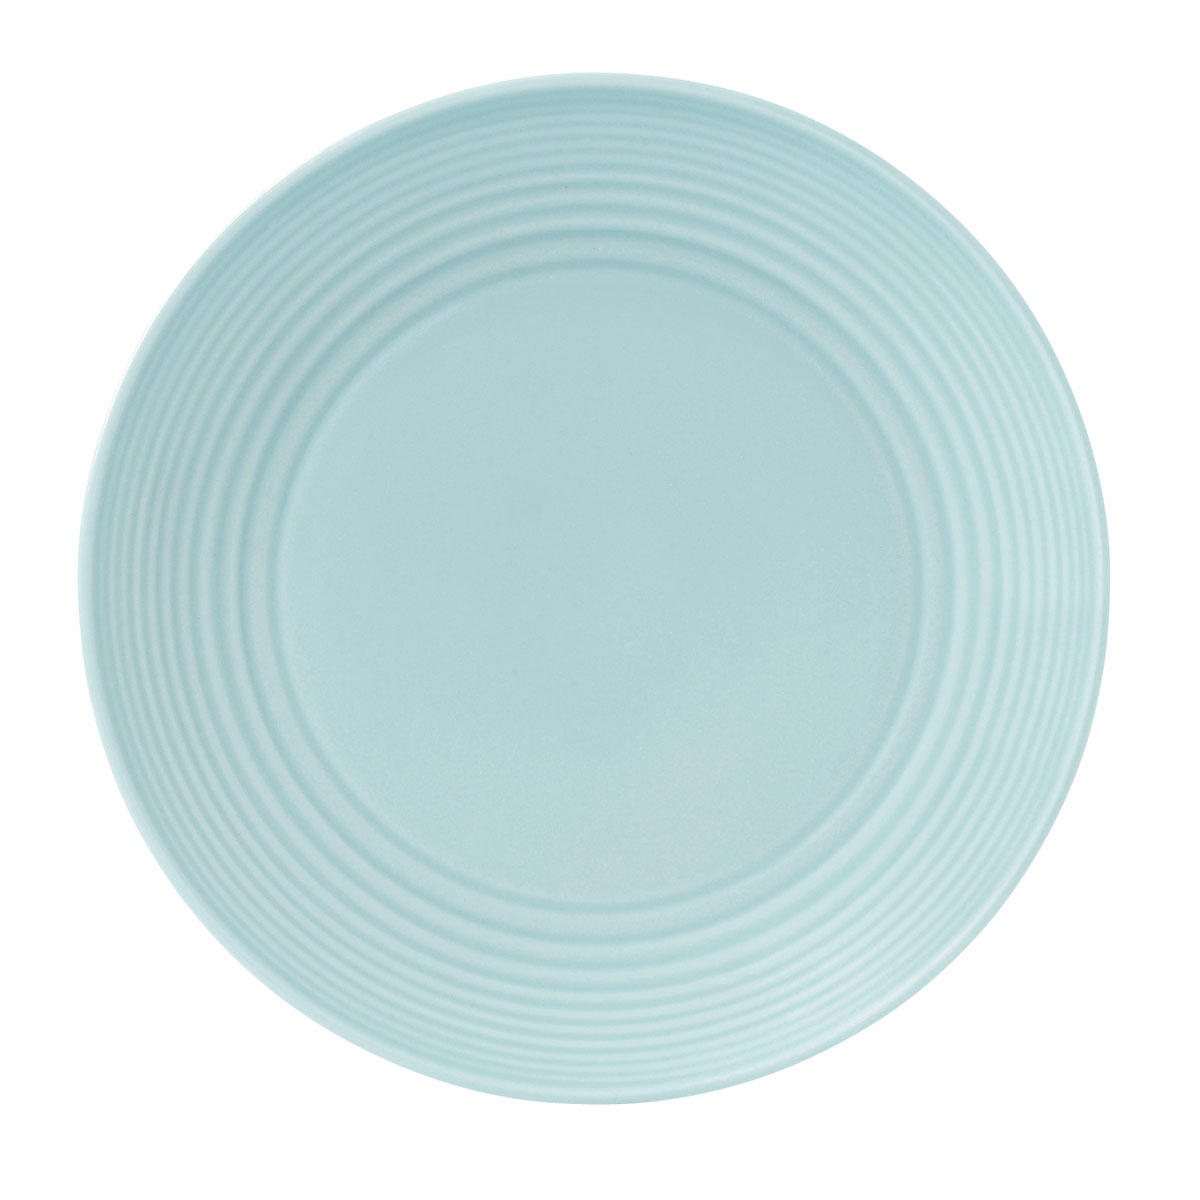 Royal Doulton Gordon Ramsay Maze Blue Salad Plate, Single